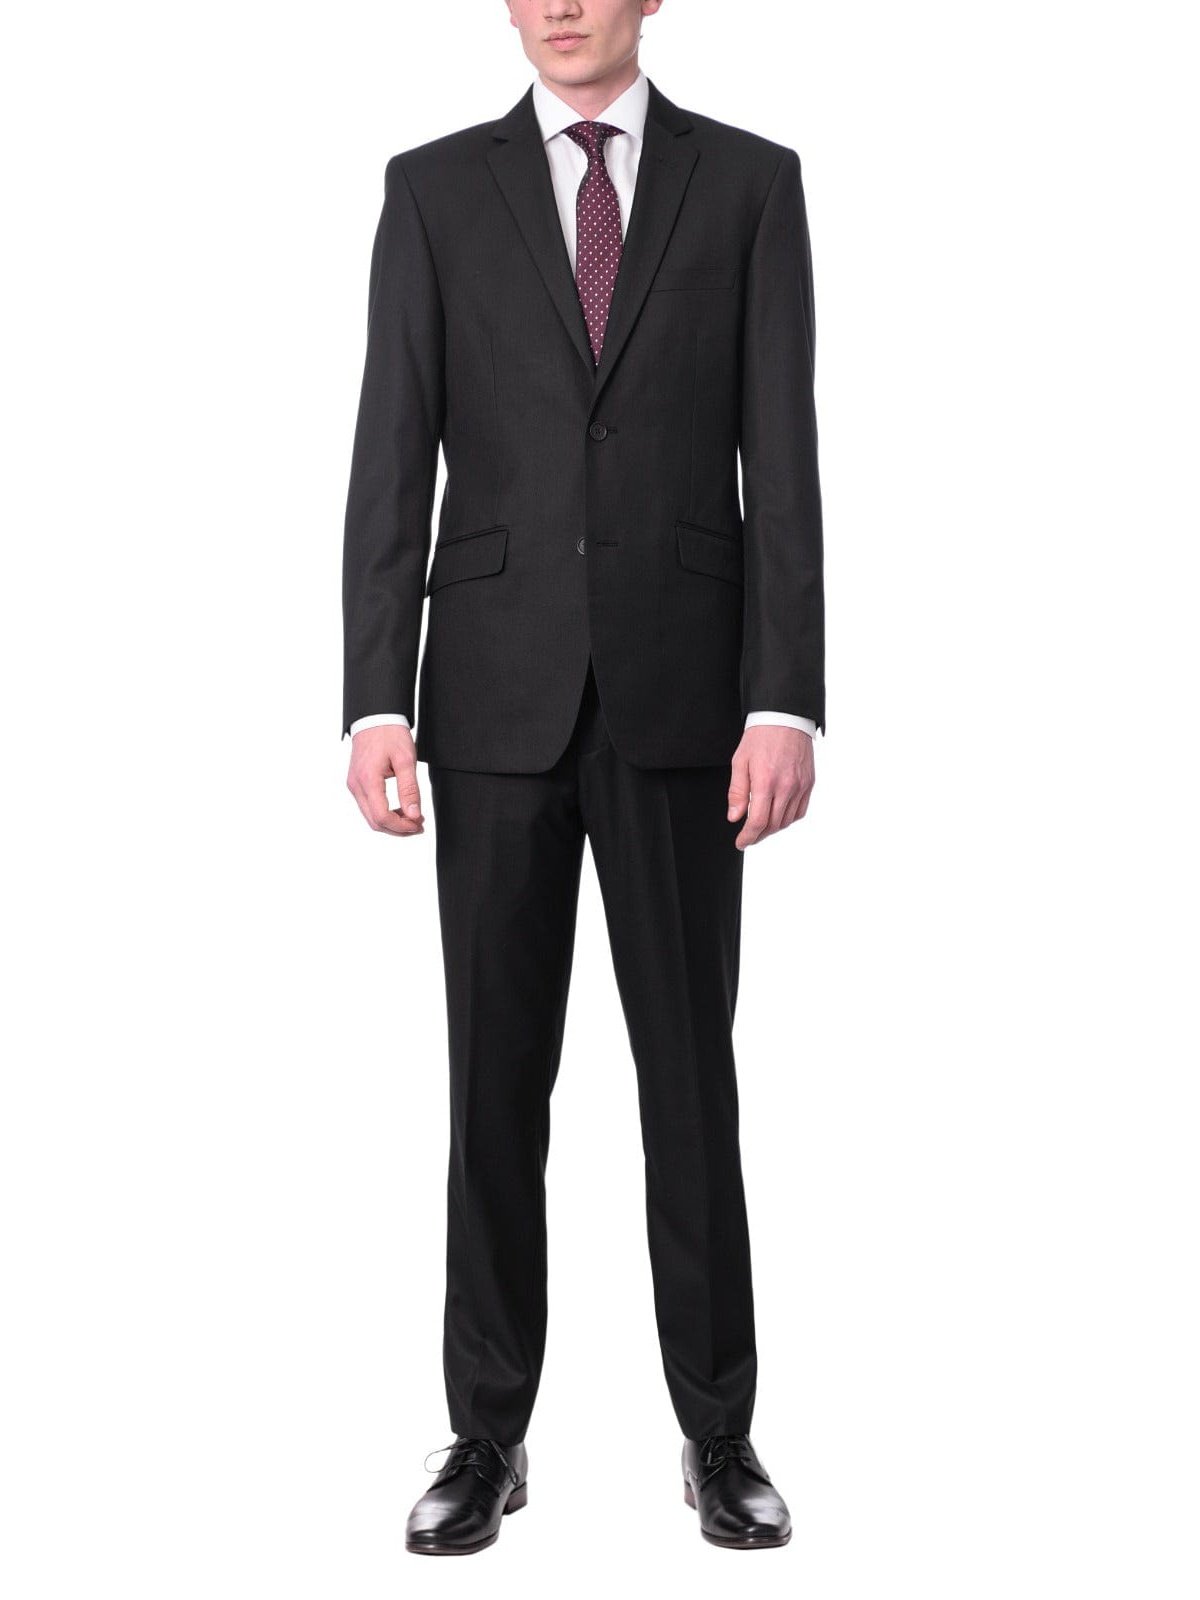 Raphael Bestselling Items Raphael Slim Fit Solid Black Two Button Suit